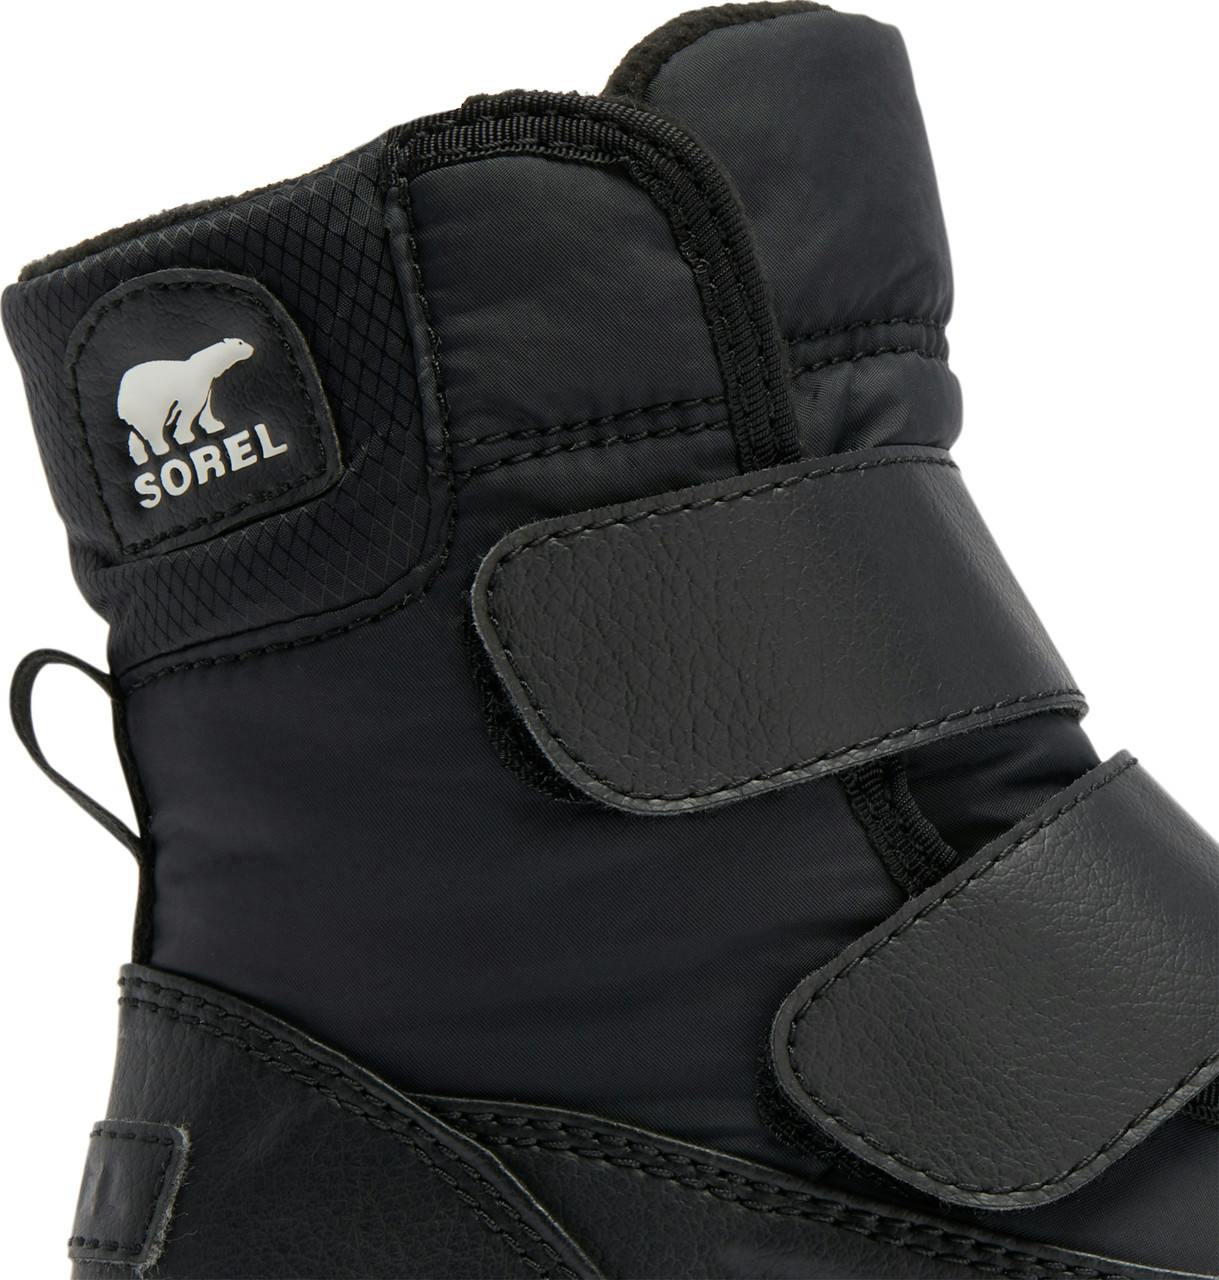 Whitney II Strap Boots Black/Sea Salt